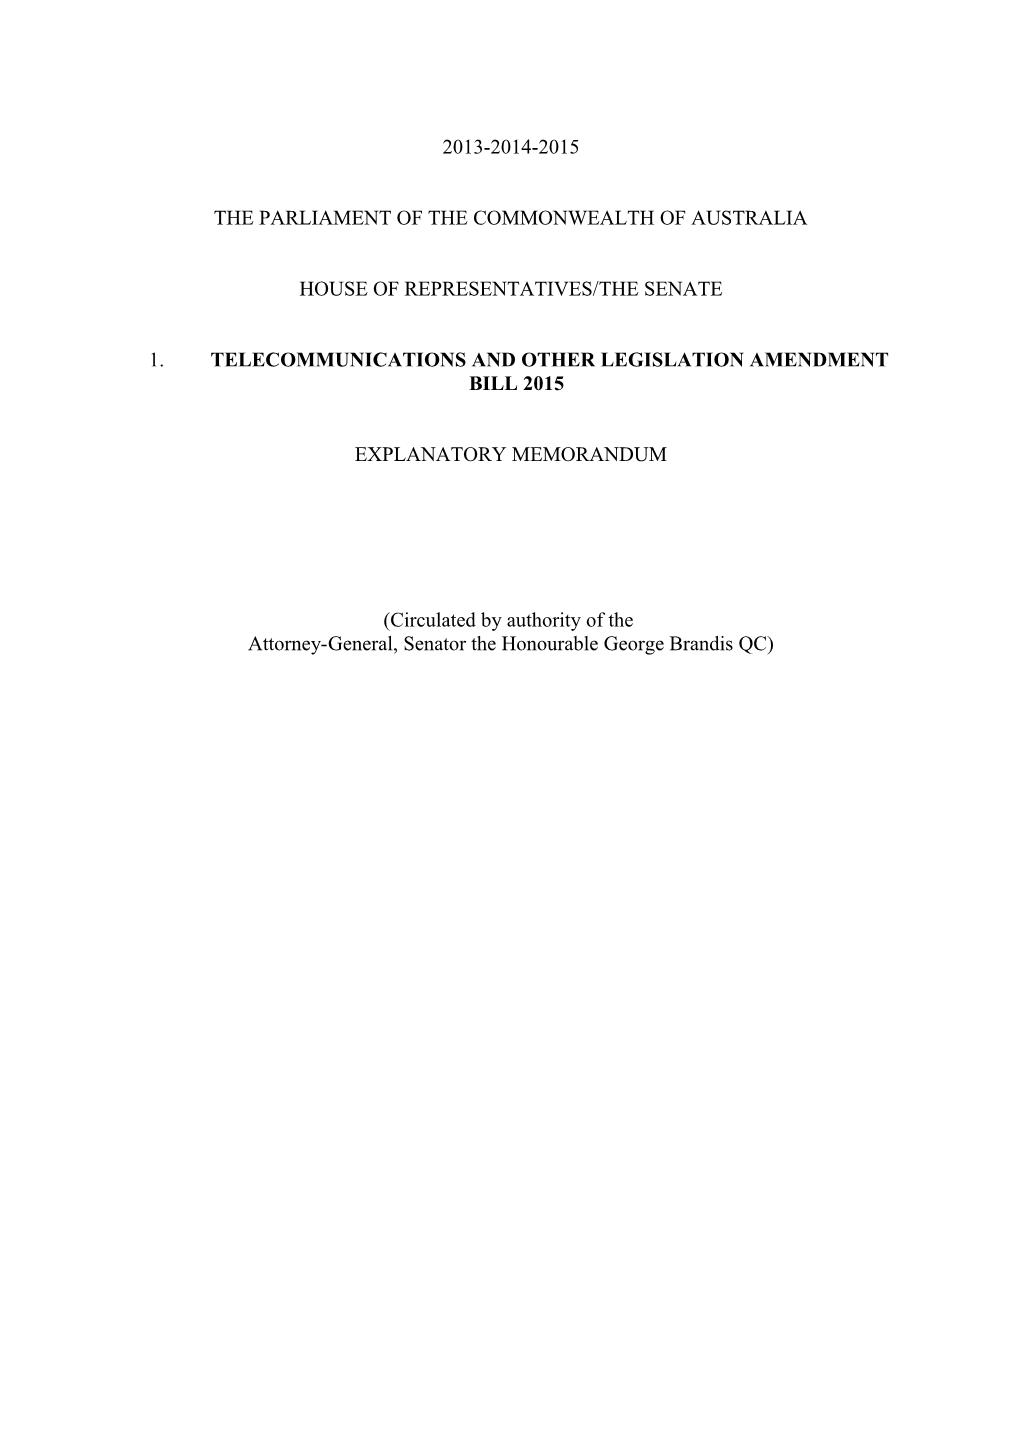 Telecommunications Sector Security Reforms ( TSSR ) - Revised Draft Explanatory Memorandum